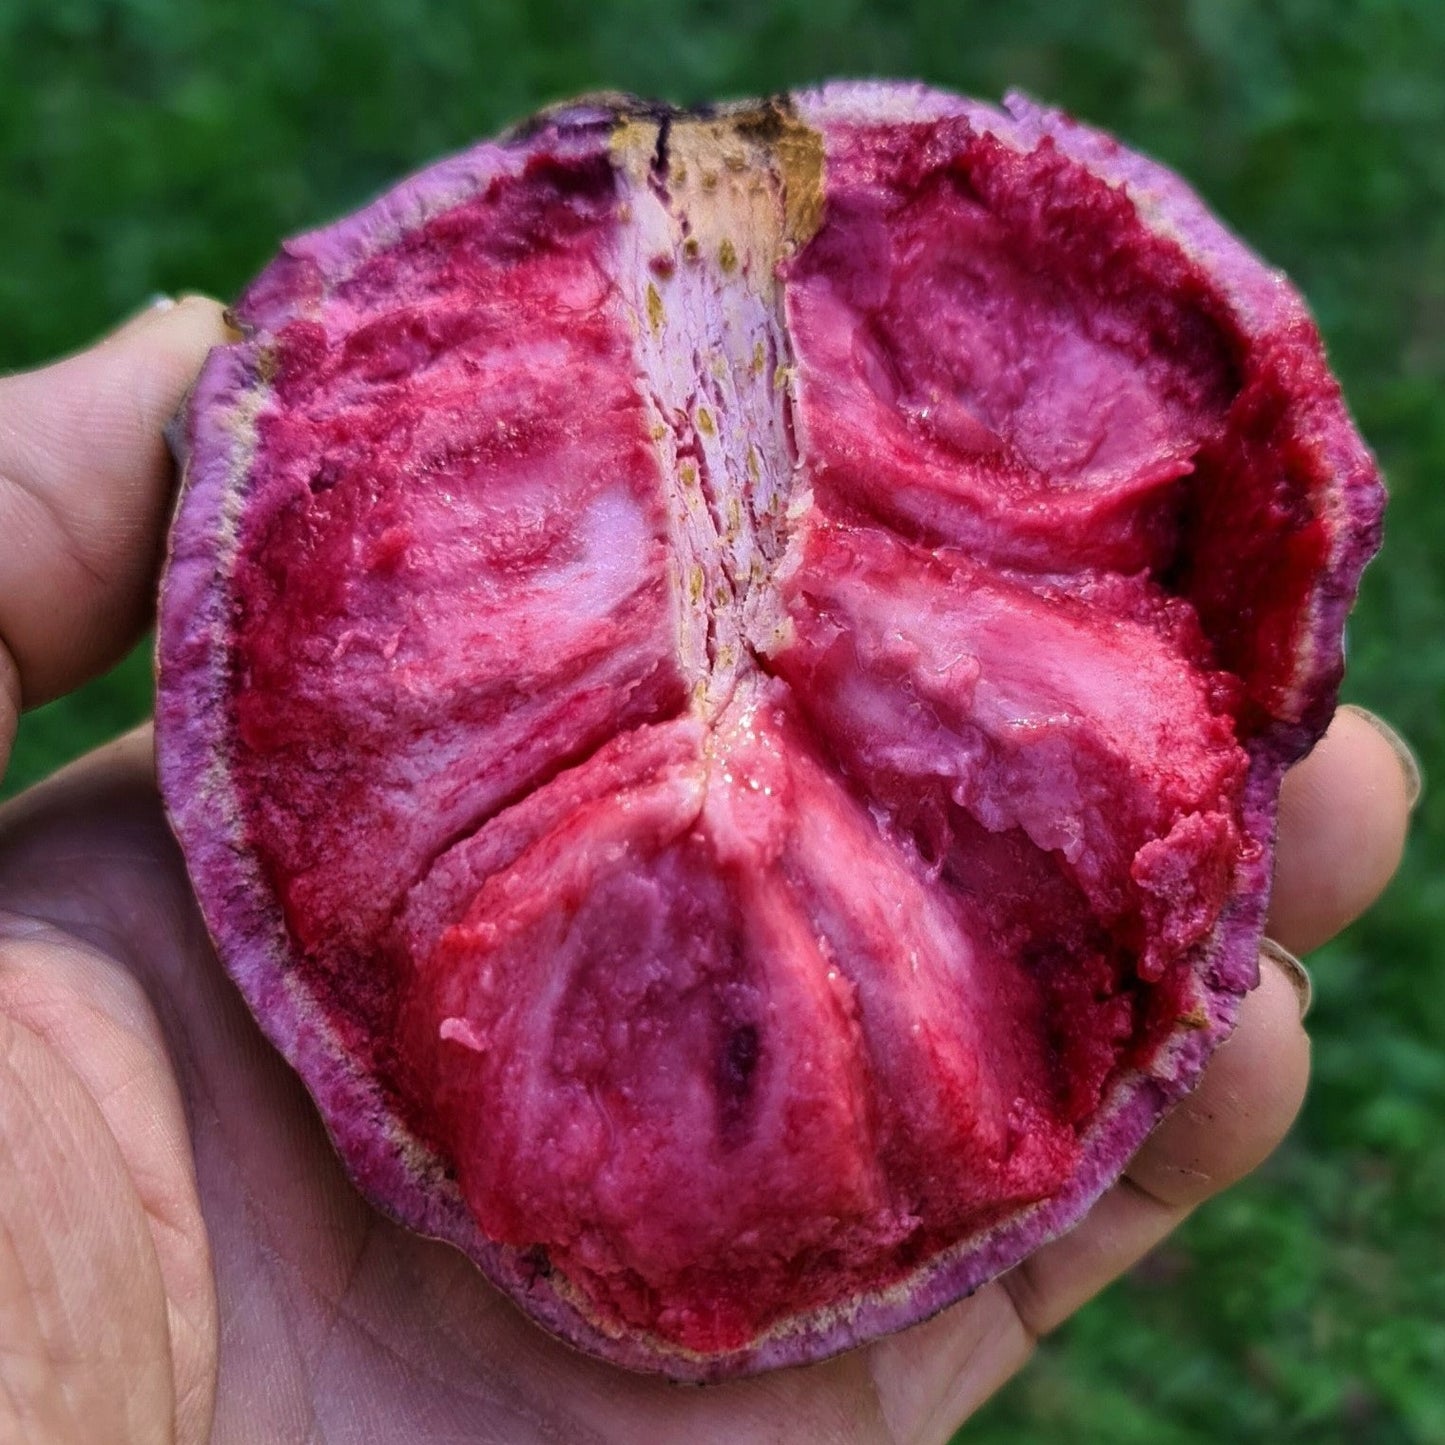 Red Ilama Fruit Plant (Annona Diversifolia)